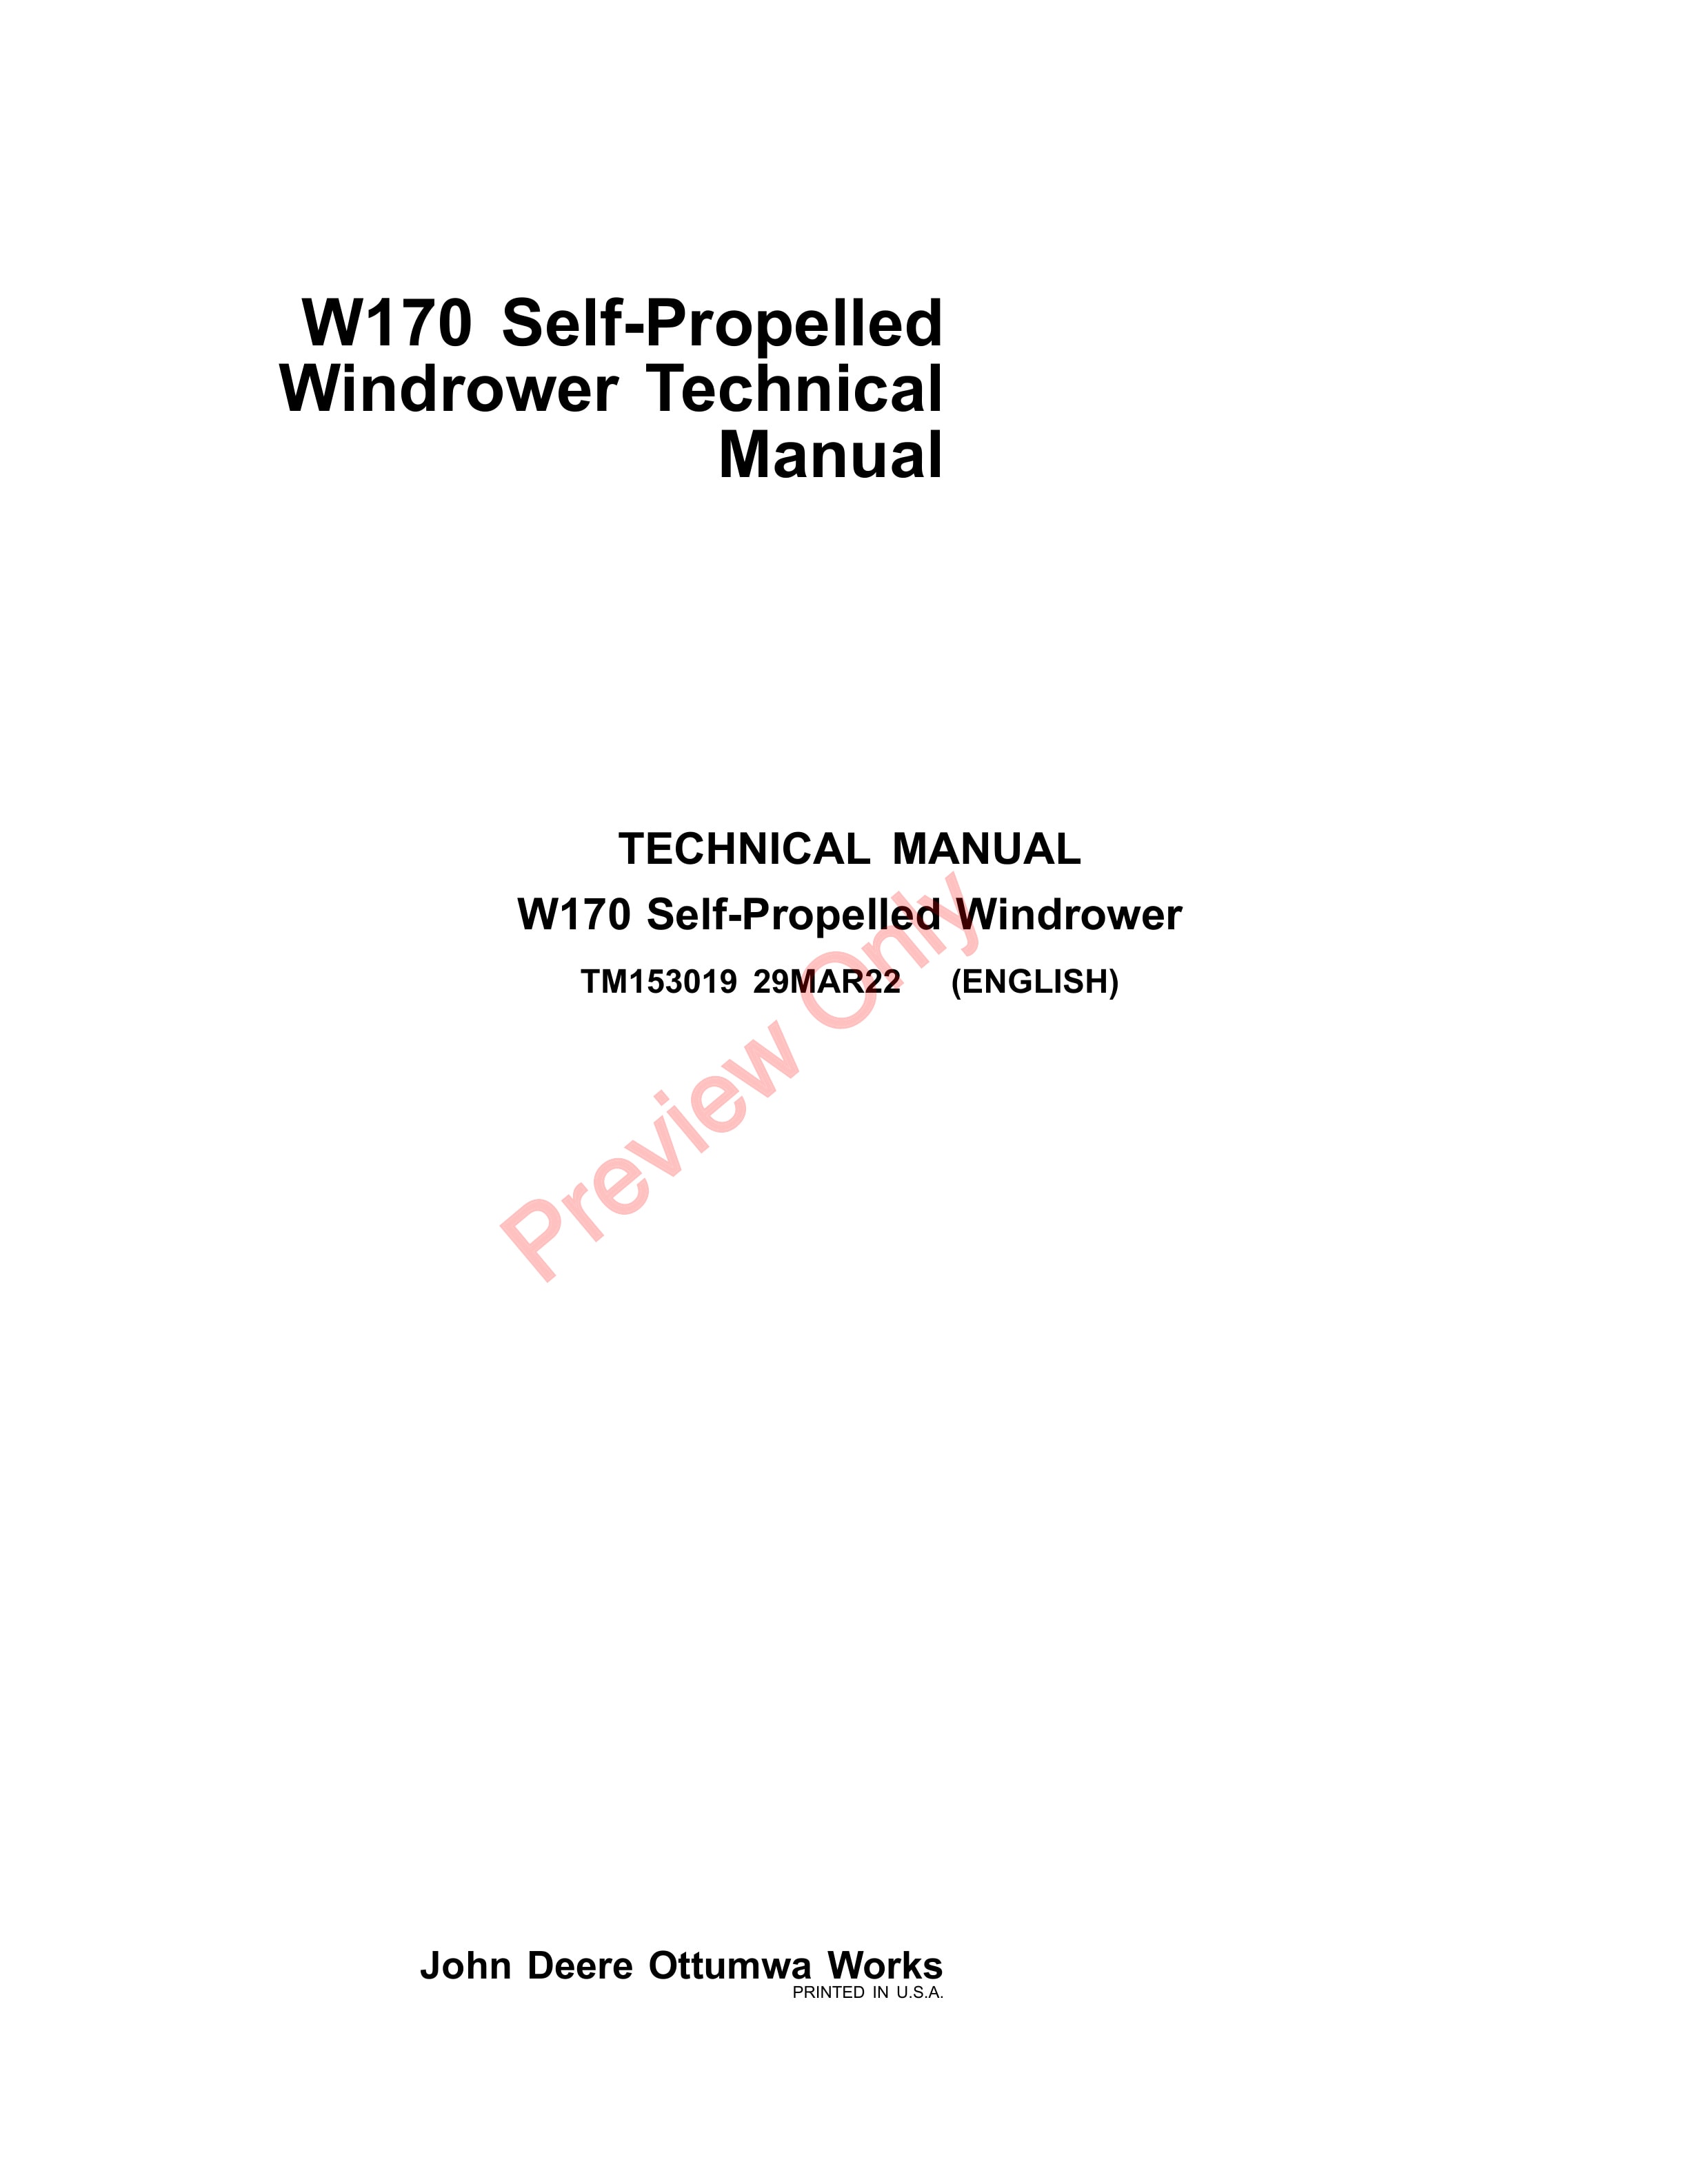 John Deere W170 Self Propelled Windrower Technical Manual TM153019 29MAR22 1